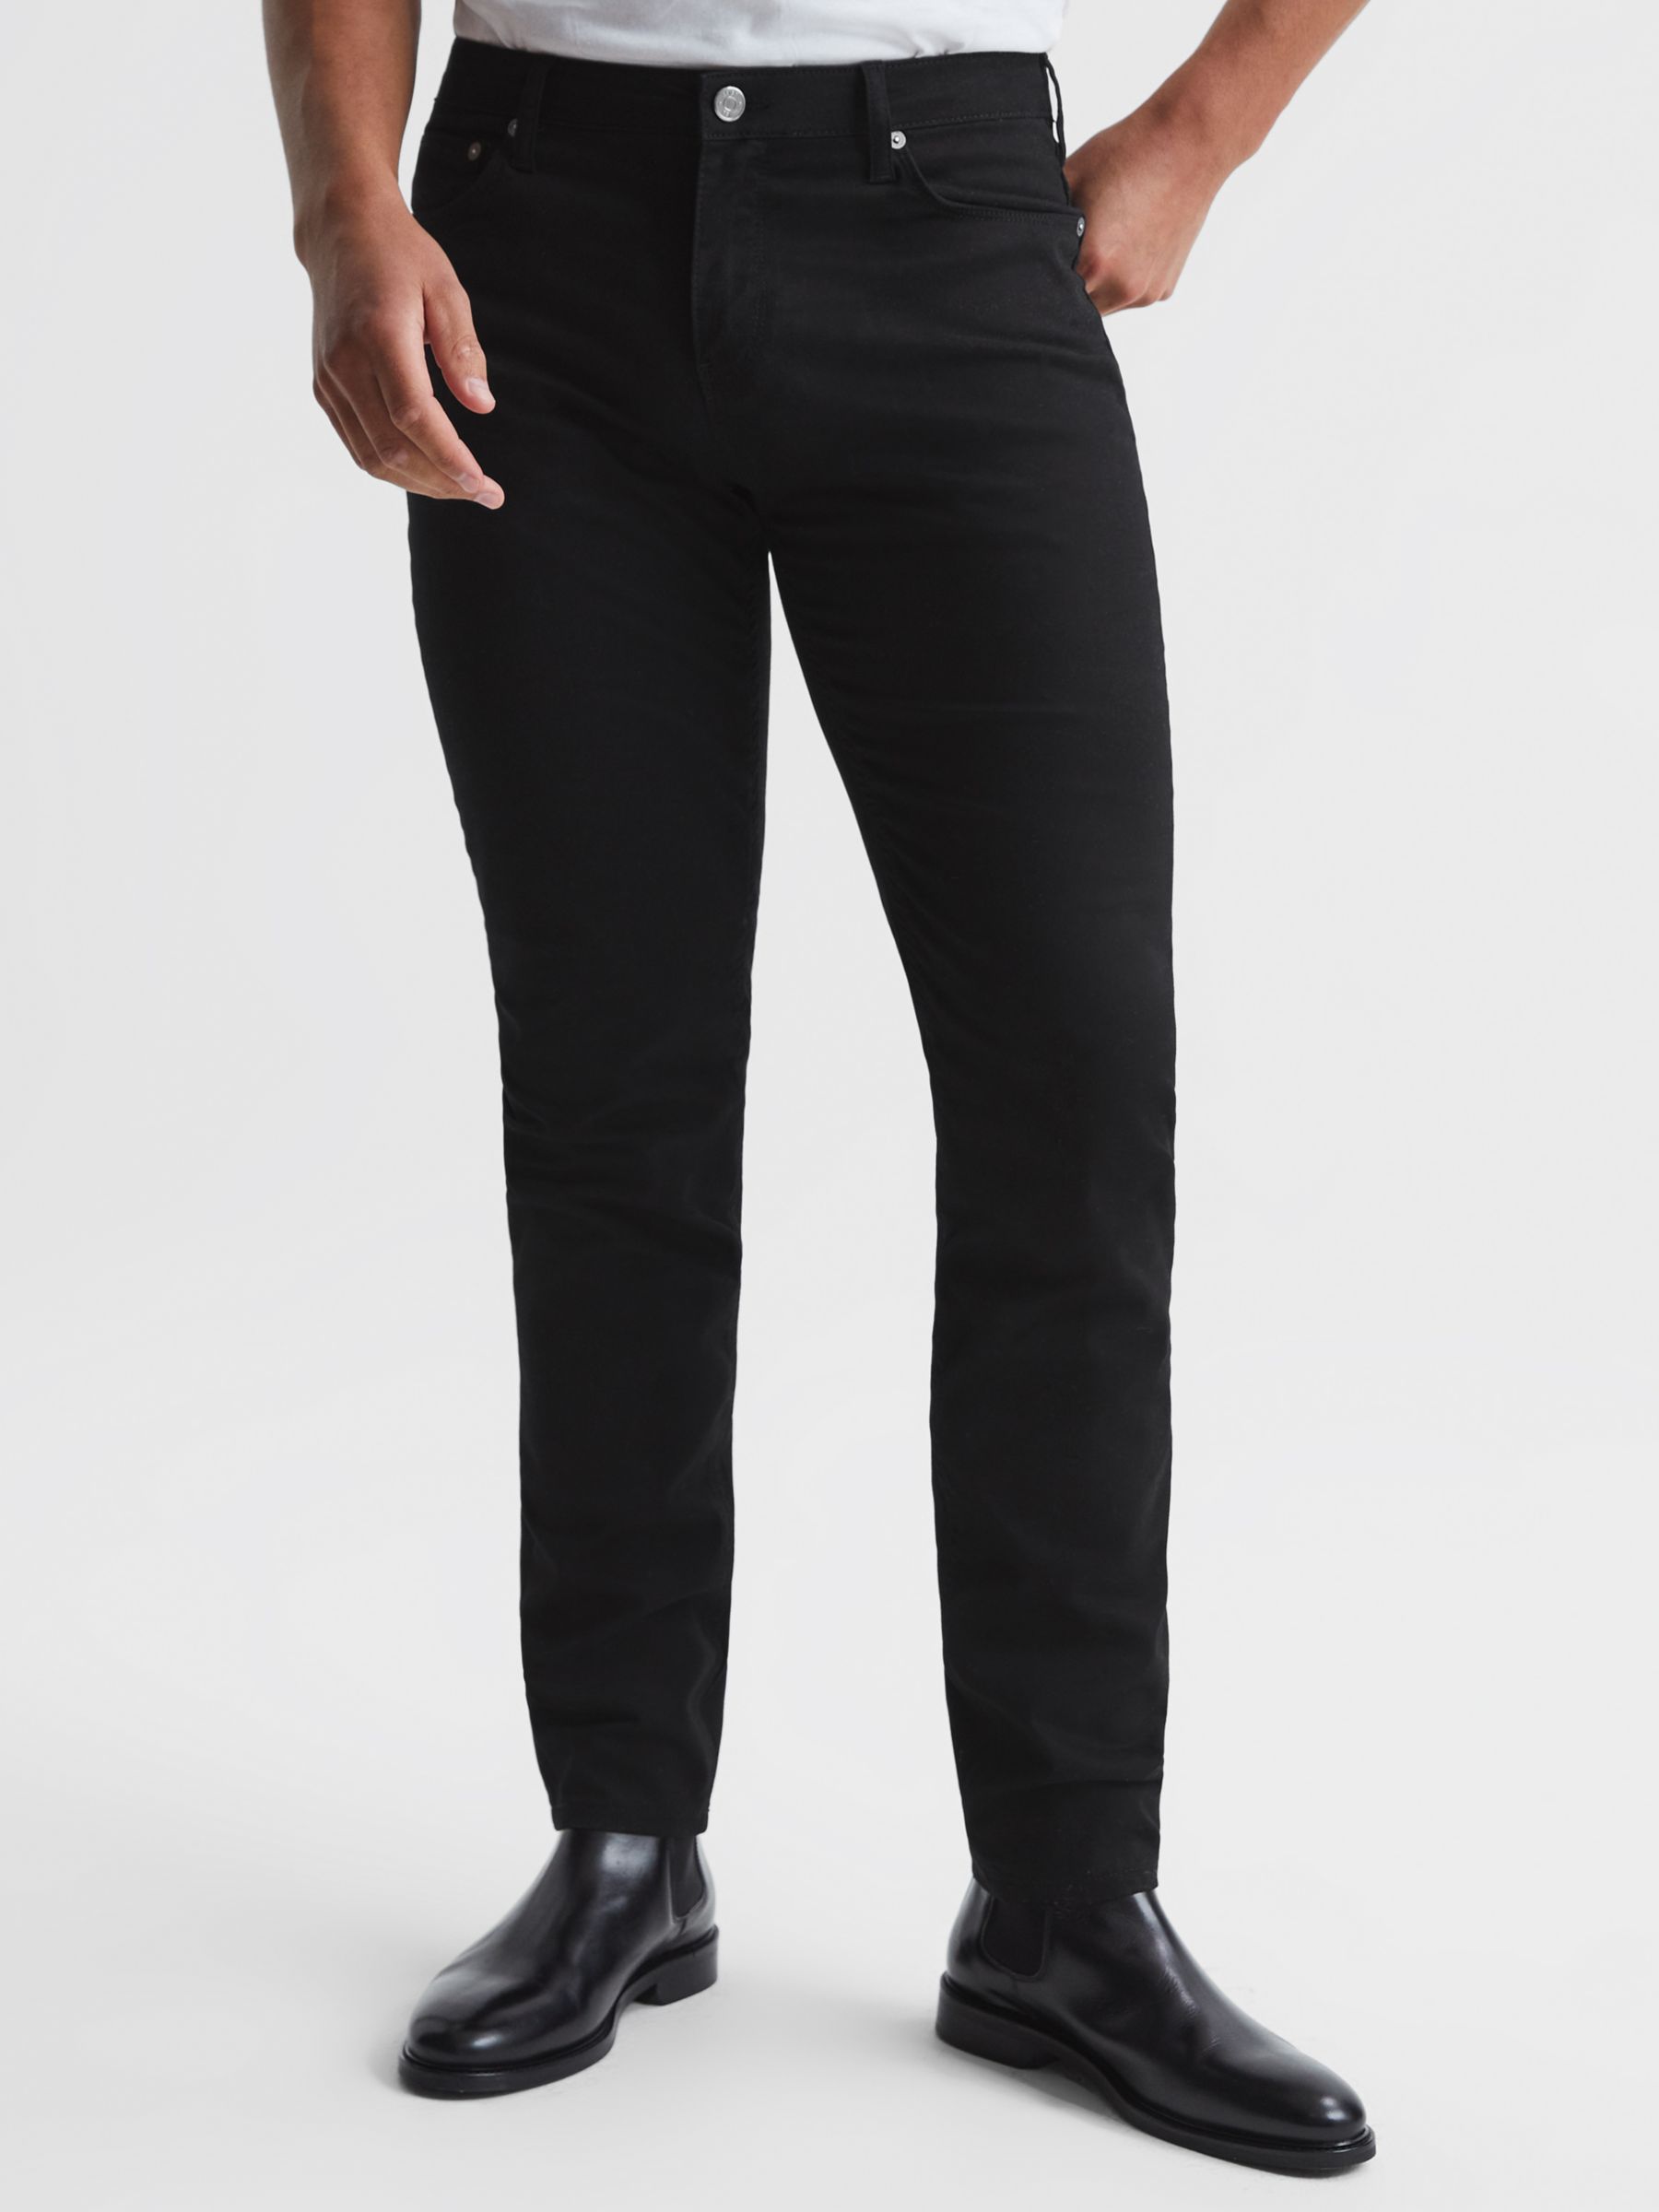 Reiss Kalkan Slim Fit Trousers, Black at John Lewis & Partners